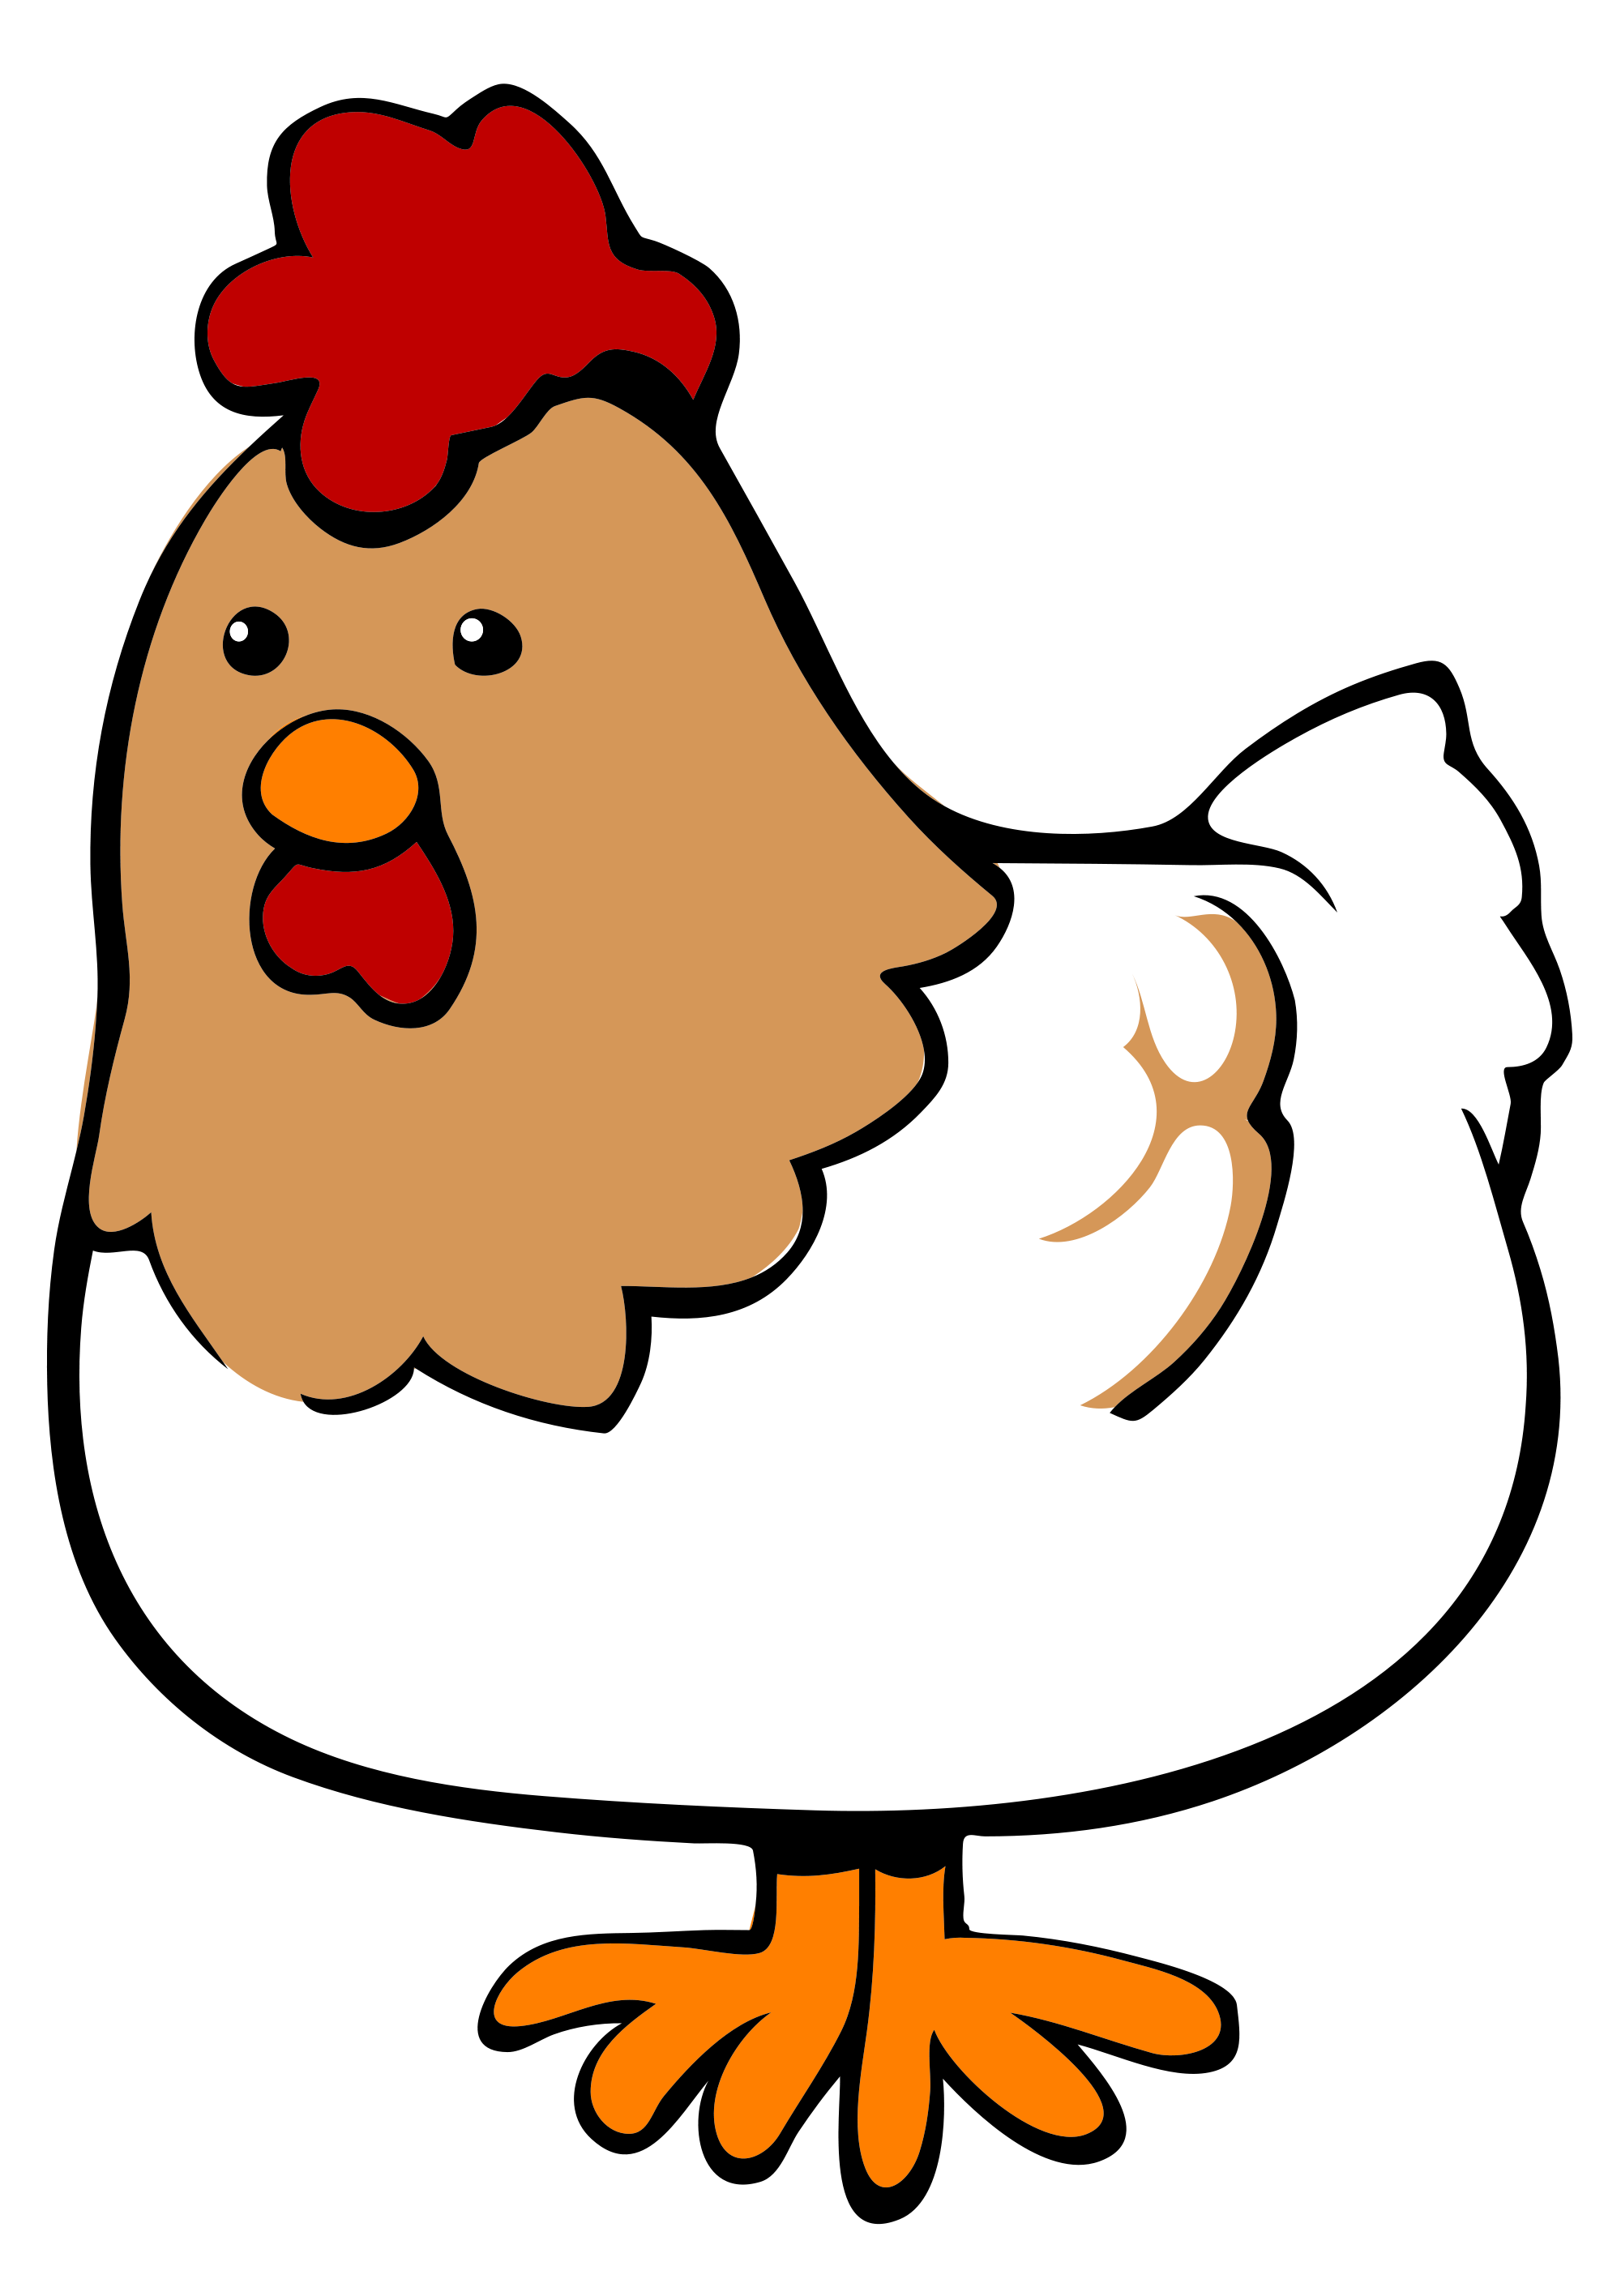 File:Chicken cartoon 04 - Wikimedia Commons